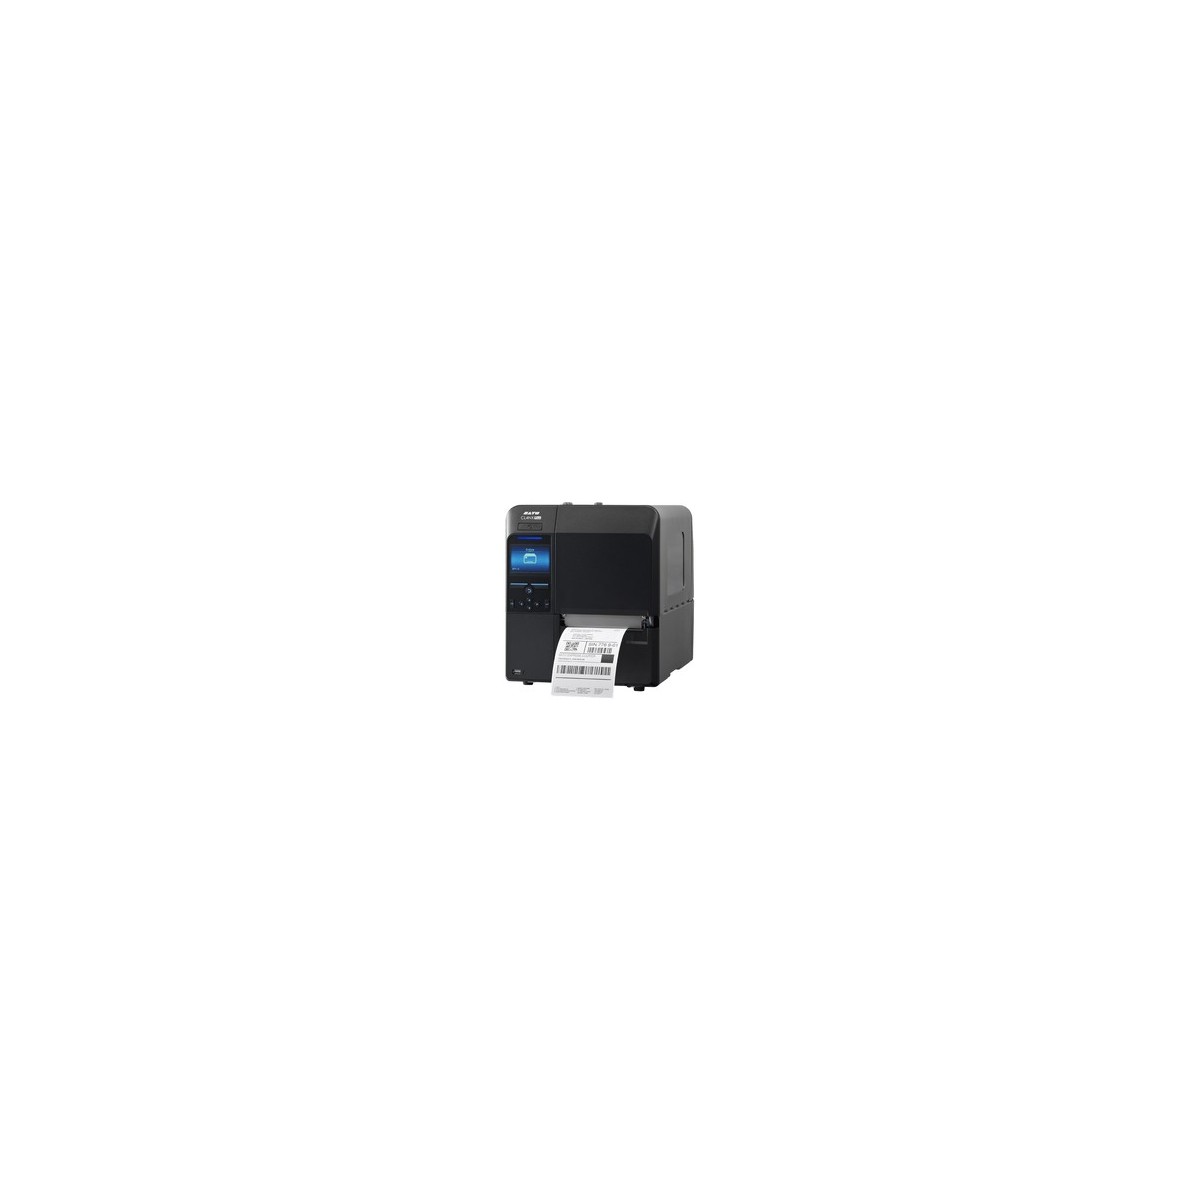 SATO CL4NX Plus - Direct thermal - Thermal transfer - POS printer - 203 x 203 DPI - 14 ips - 355 mm-sec - 0.06 - 0.268 µm